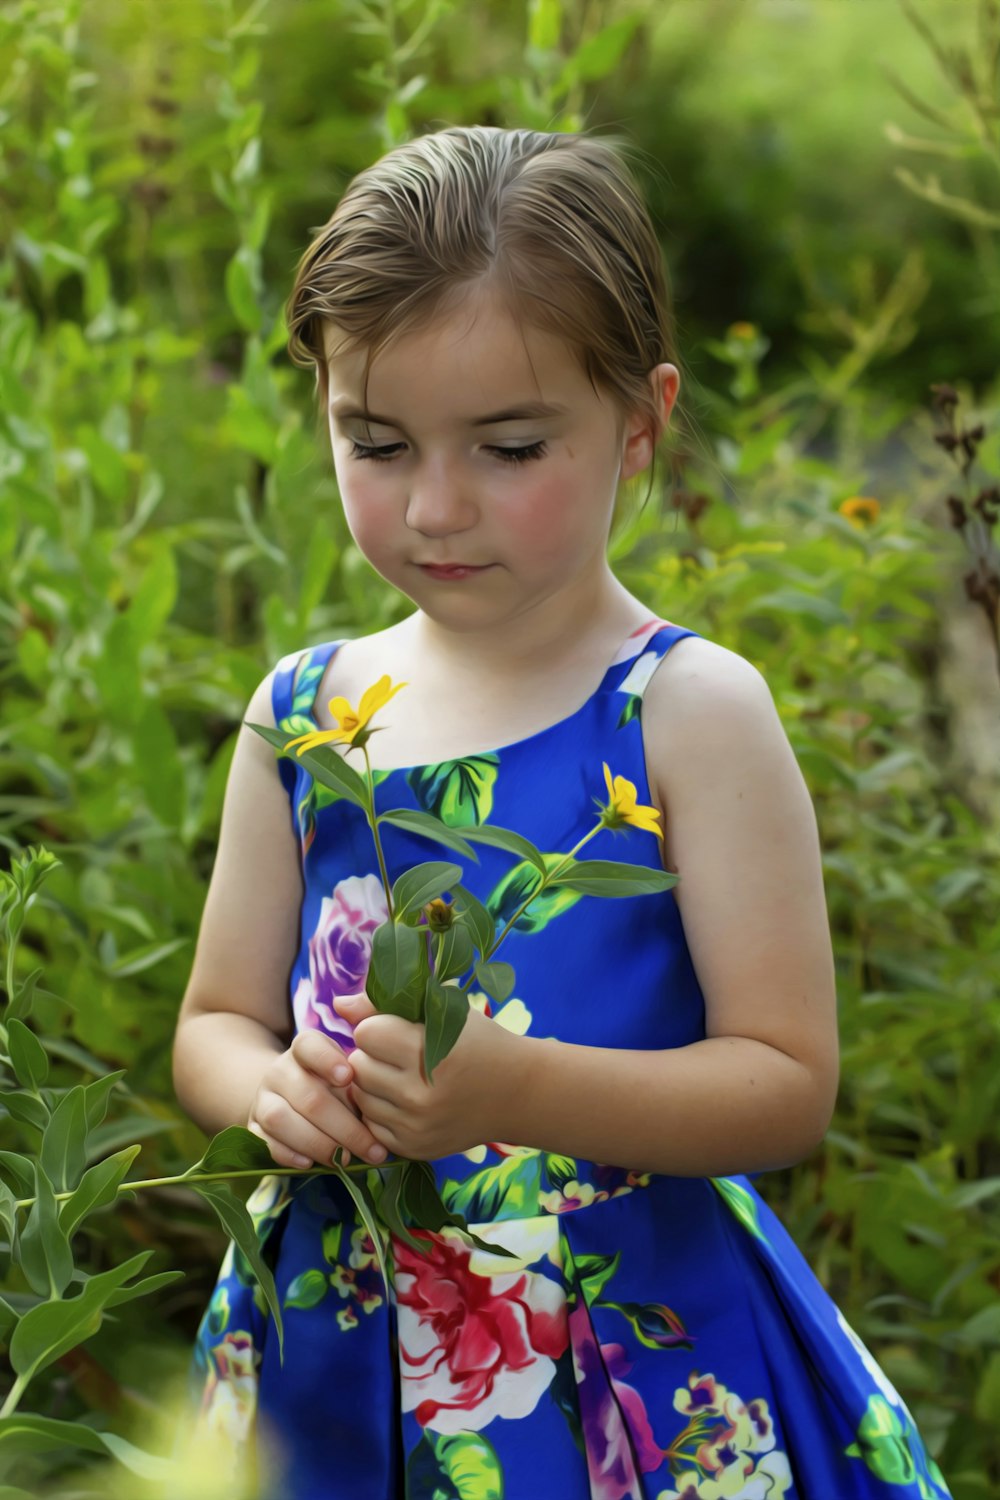 a little girl in a blue dress holding a flower